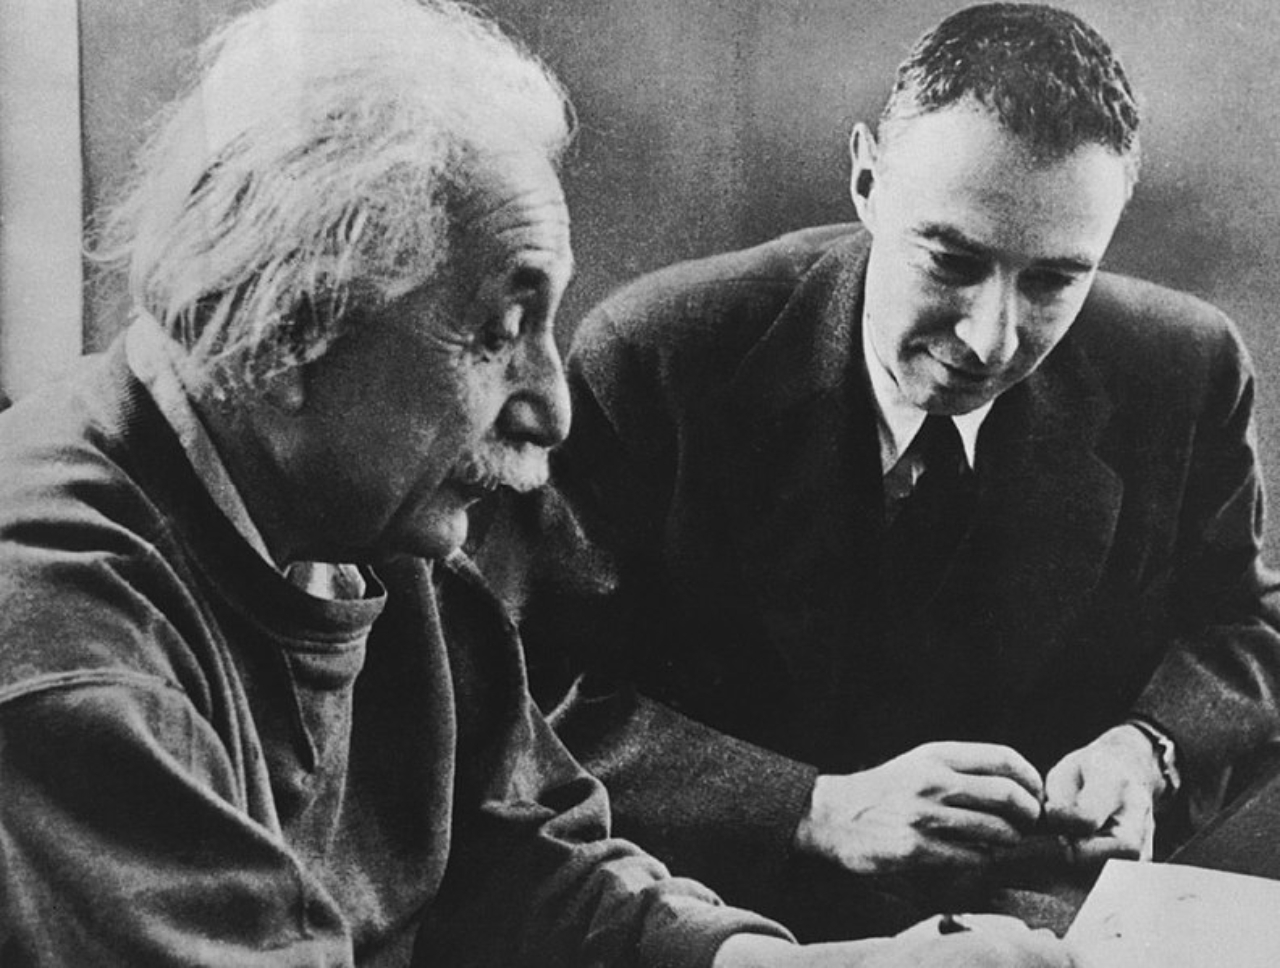 Os físicos Albert Einstein e Robert Oppenheimer reunidos